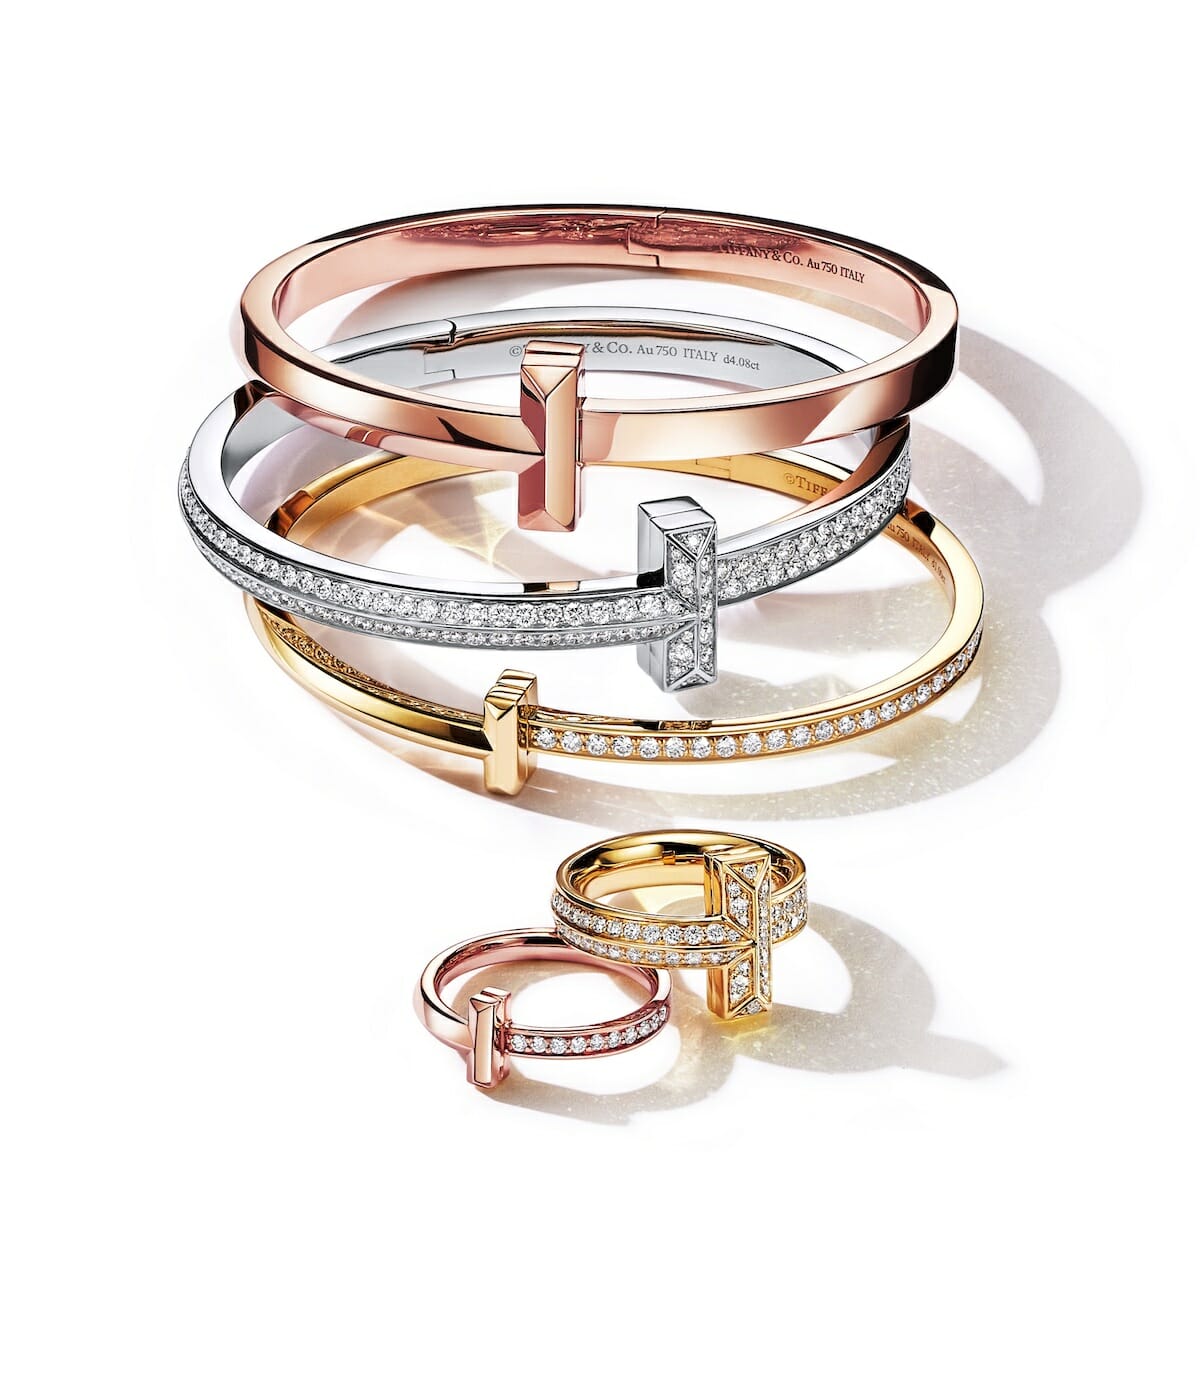 Tiffany & Co. Tiffany T Diamond Bracelets Collection Friendship Bracelet Gifts Ideas